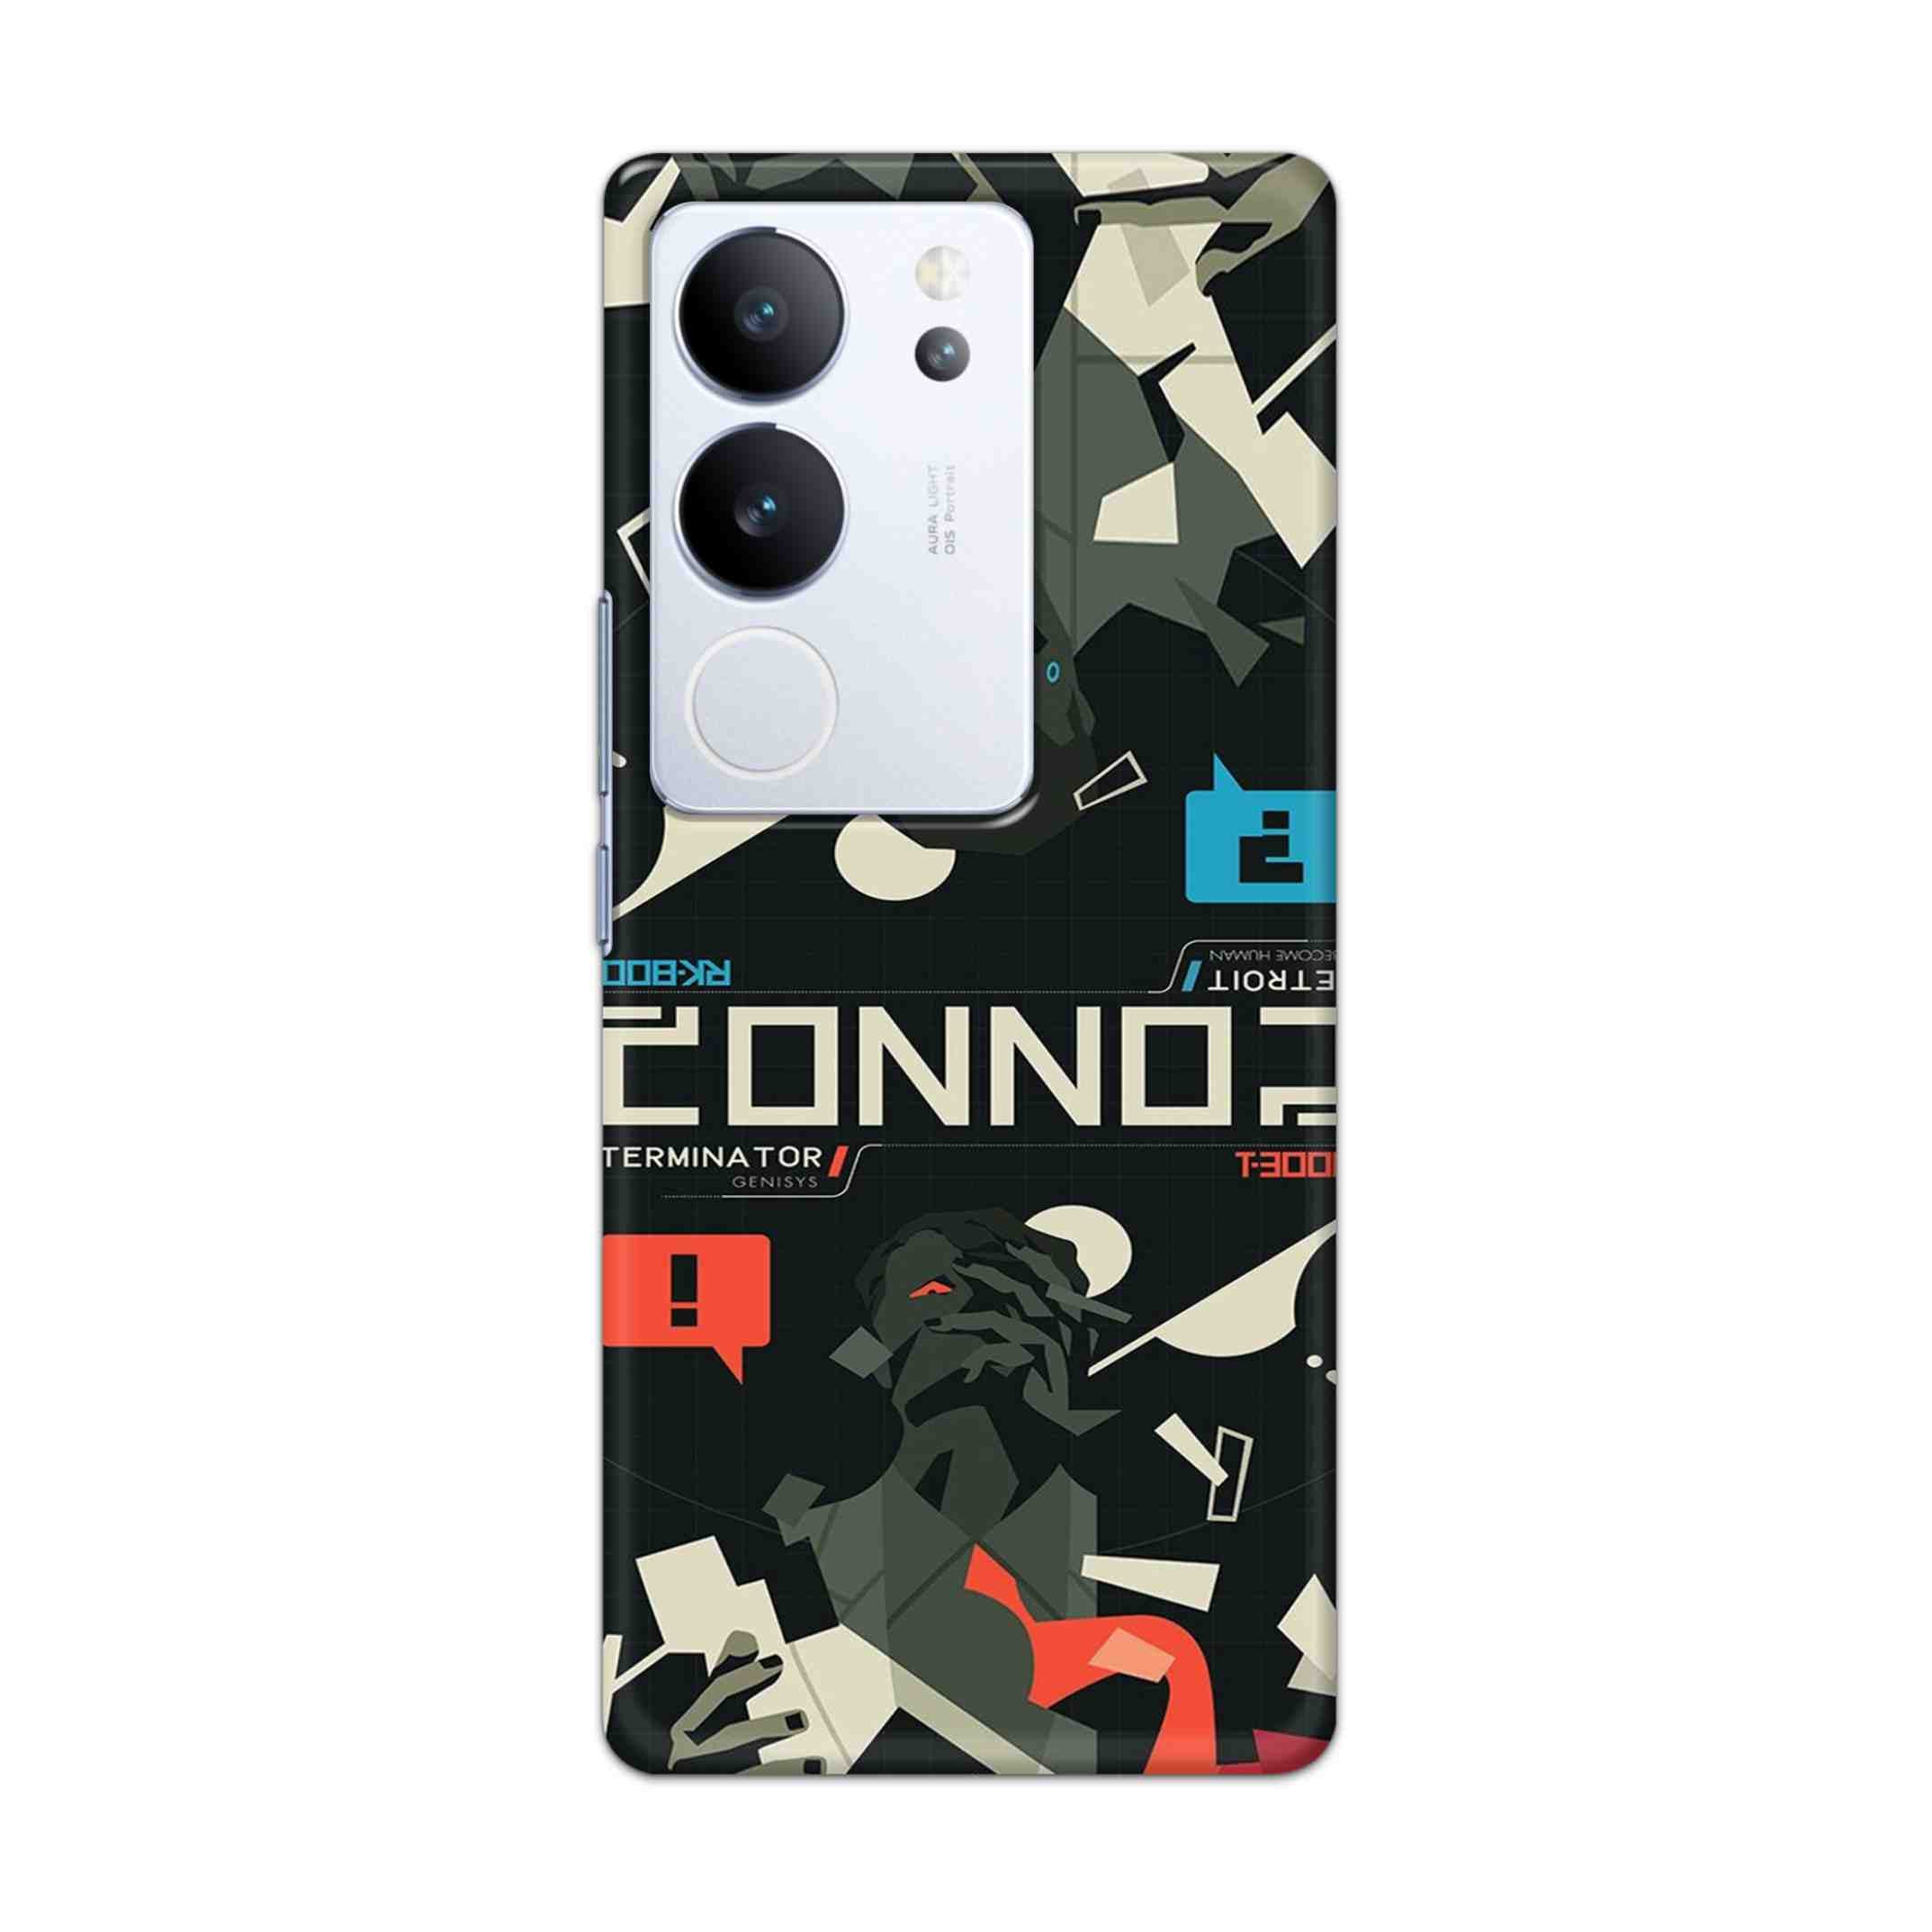 Buy Terminator Hard Back Mobile Phone Case/Cover For Vivo V29 / V29 Pro Online